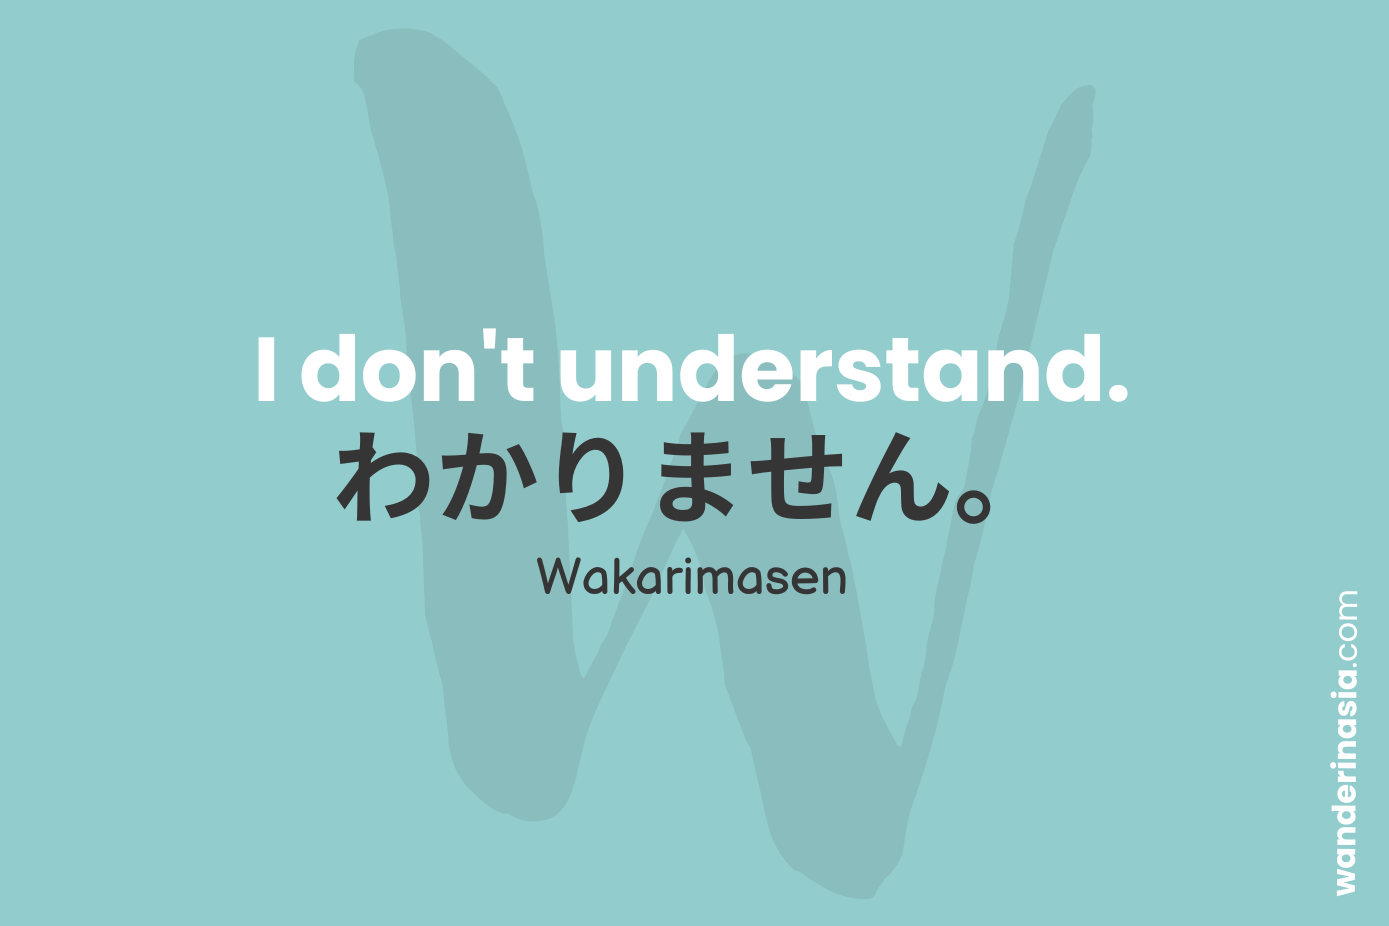 Basic Japanese Phrases for Travelers - I dont understand